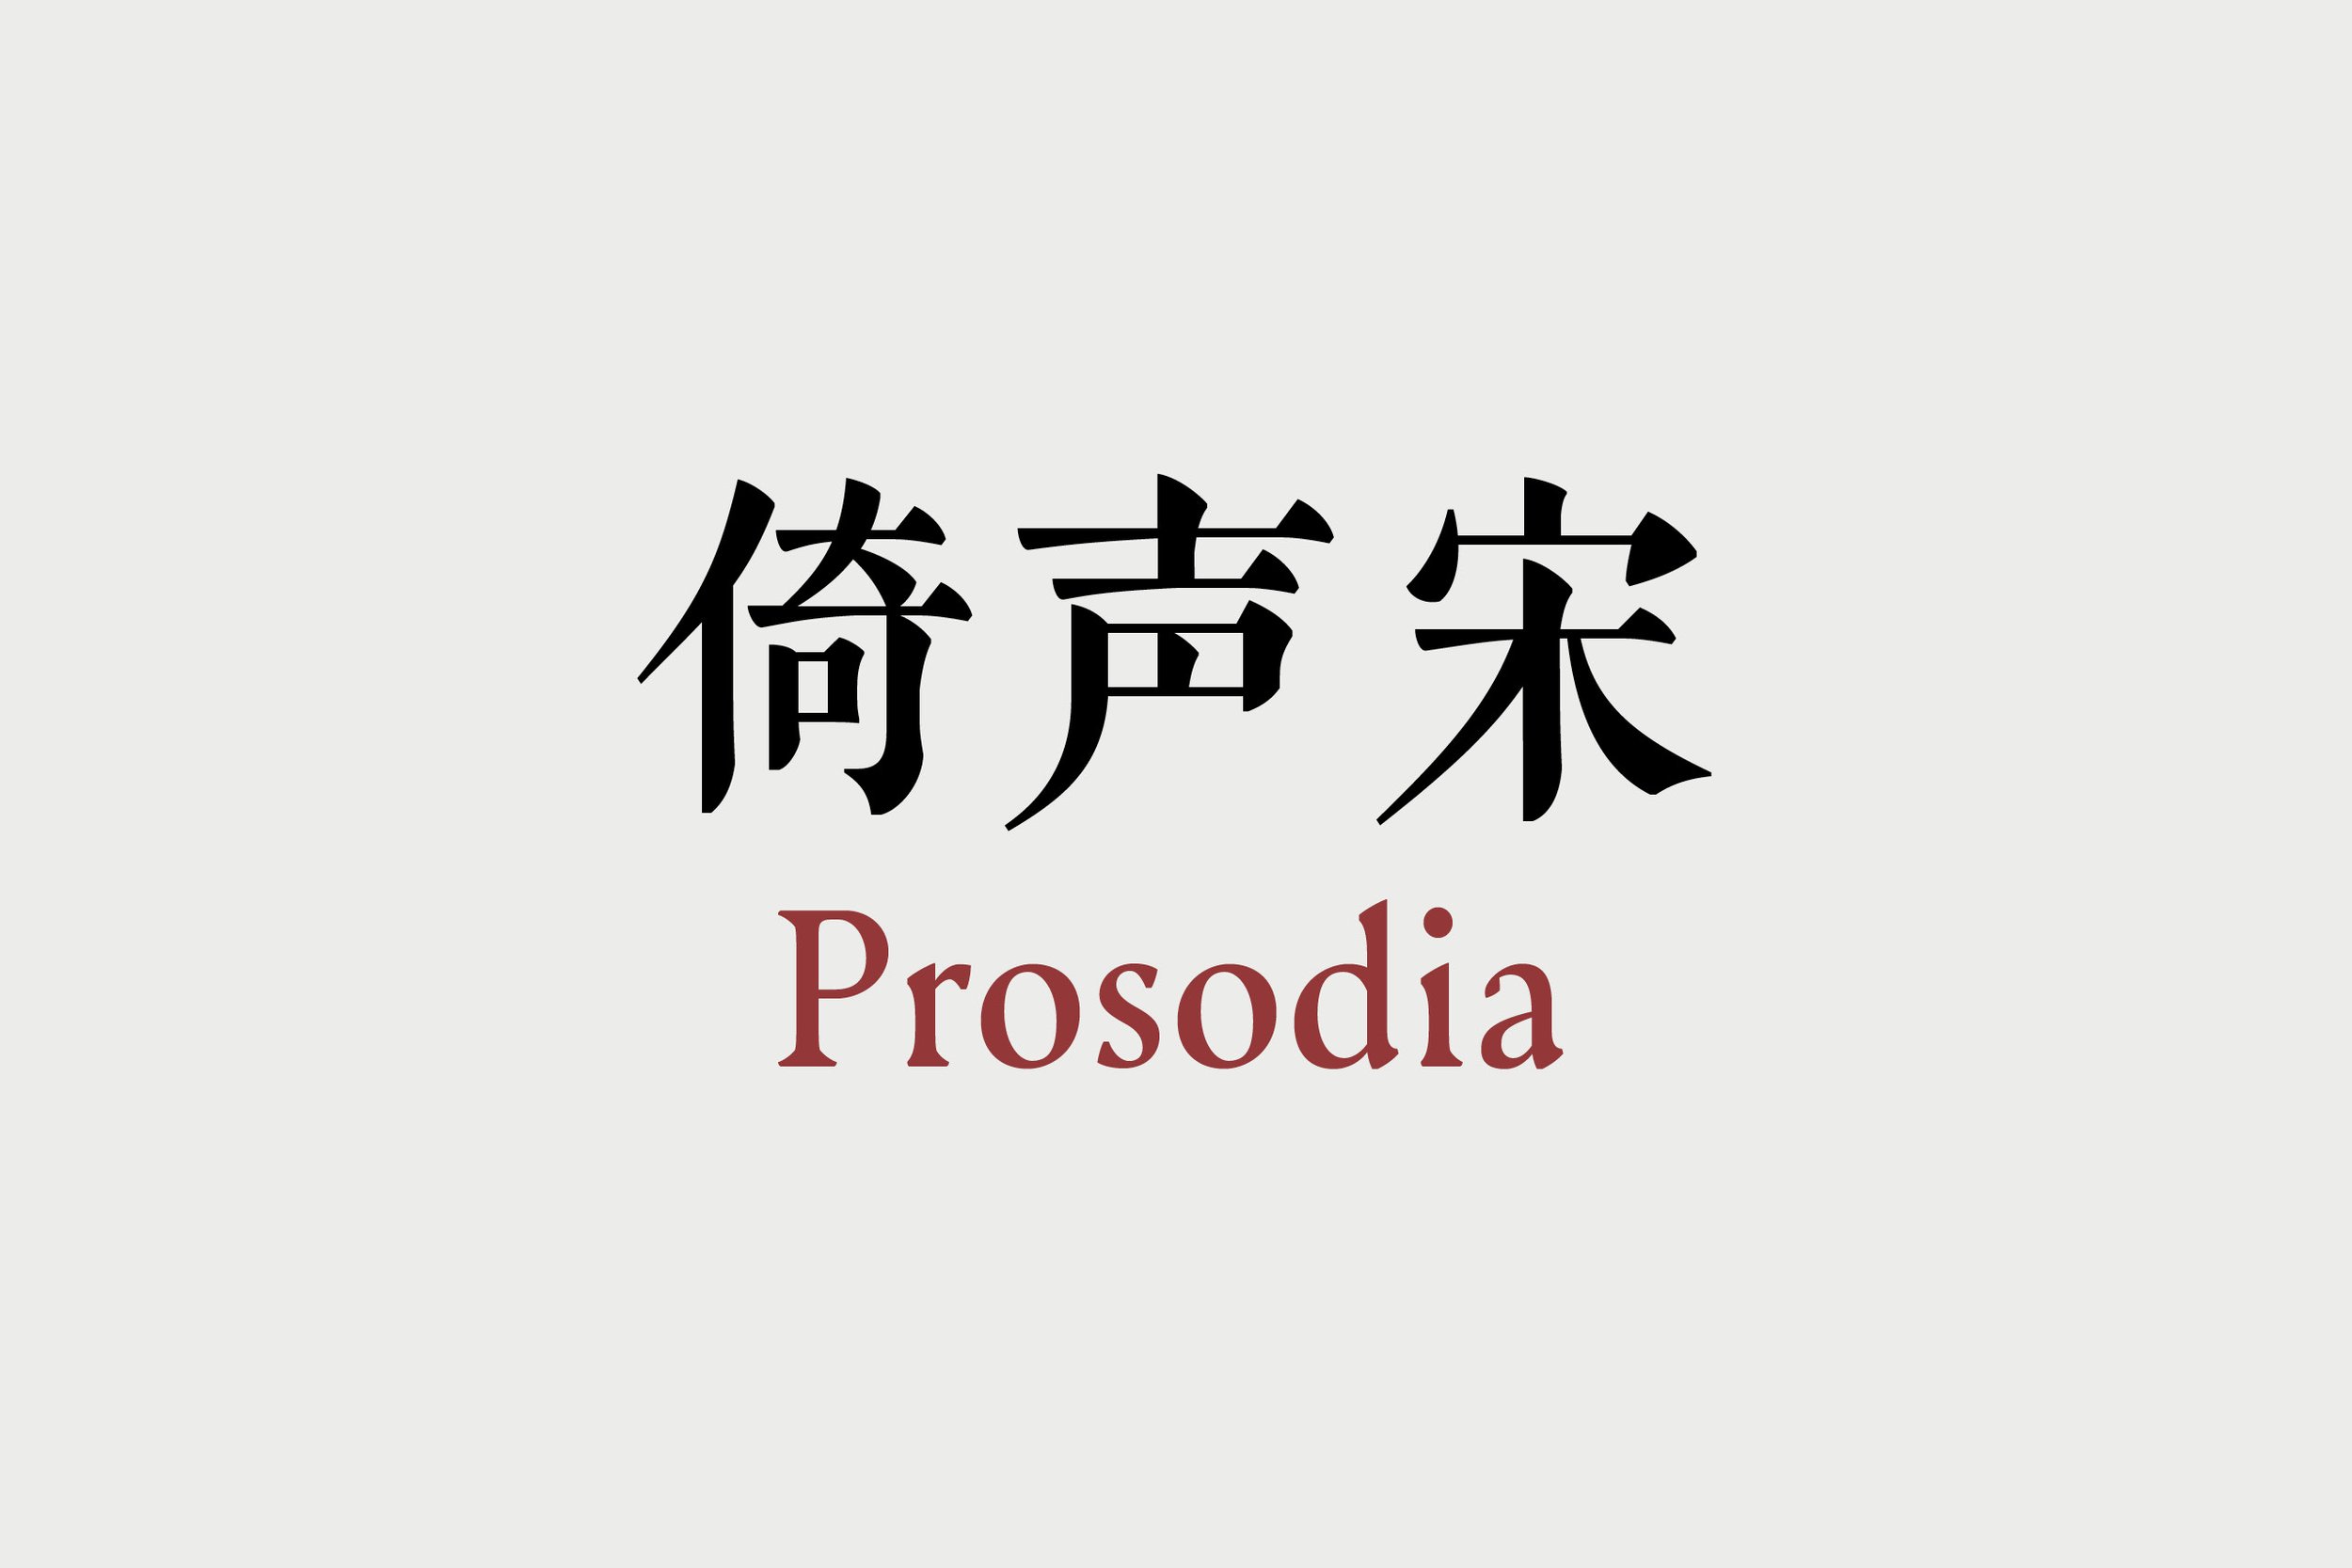 Web_Prosodia_1920x1280_1.jpg